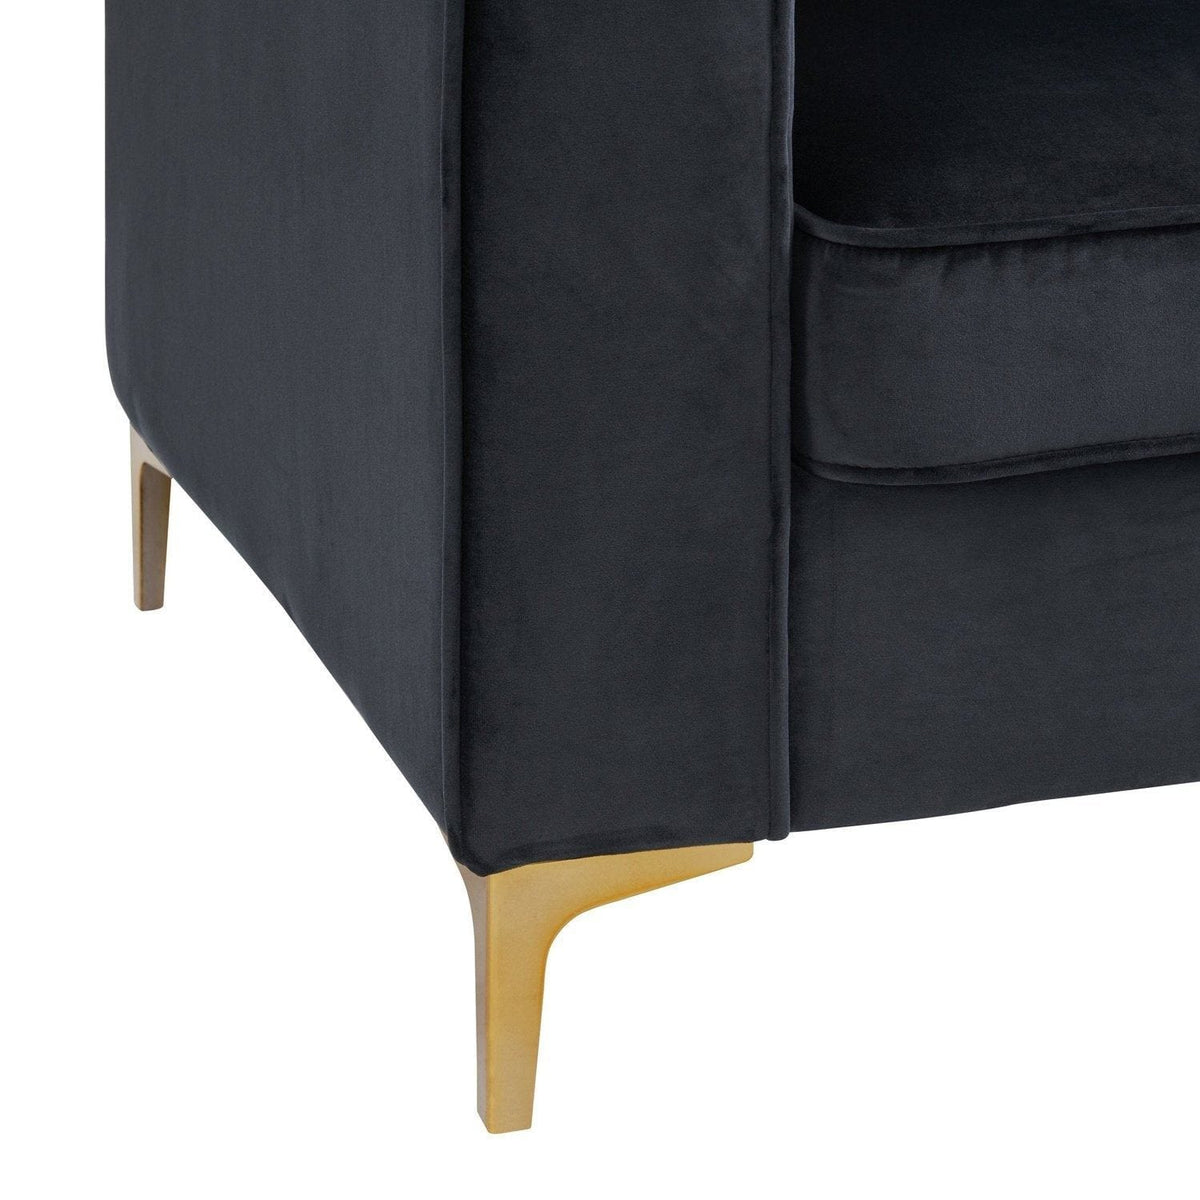 Iconic Home Brasilia Modular Chaise Velvet Sectional Sofa With Gold Legs 